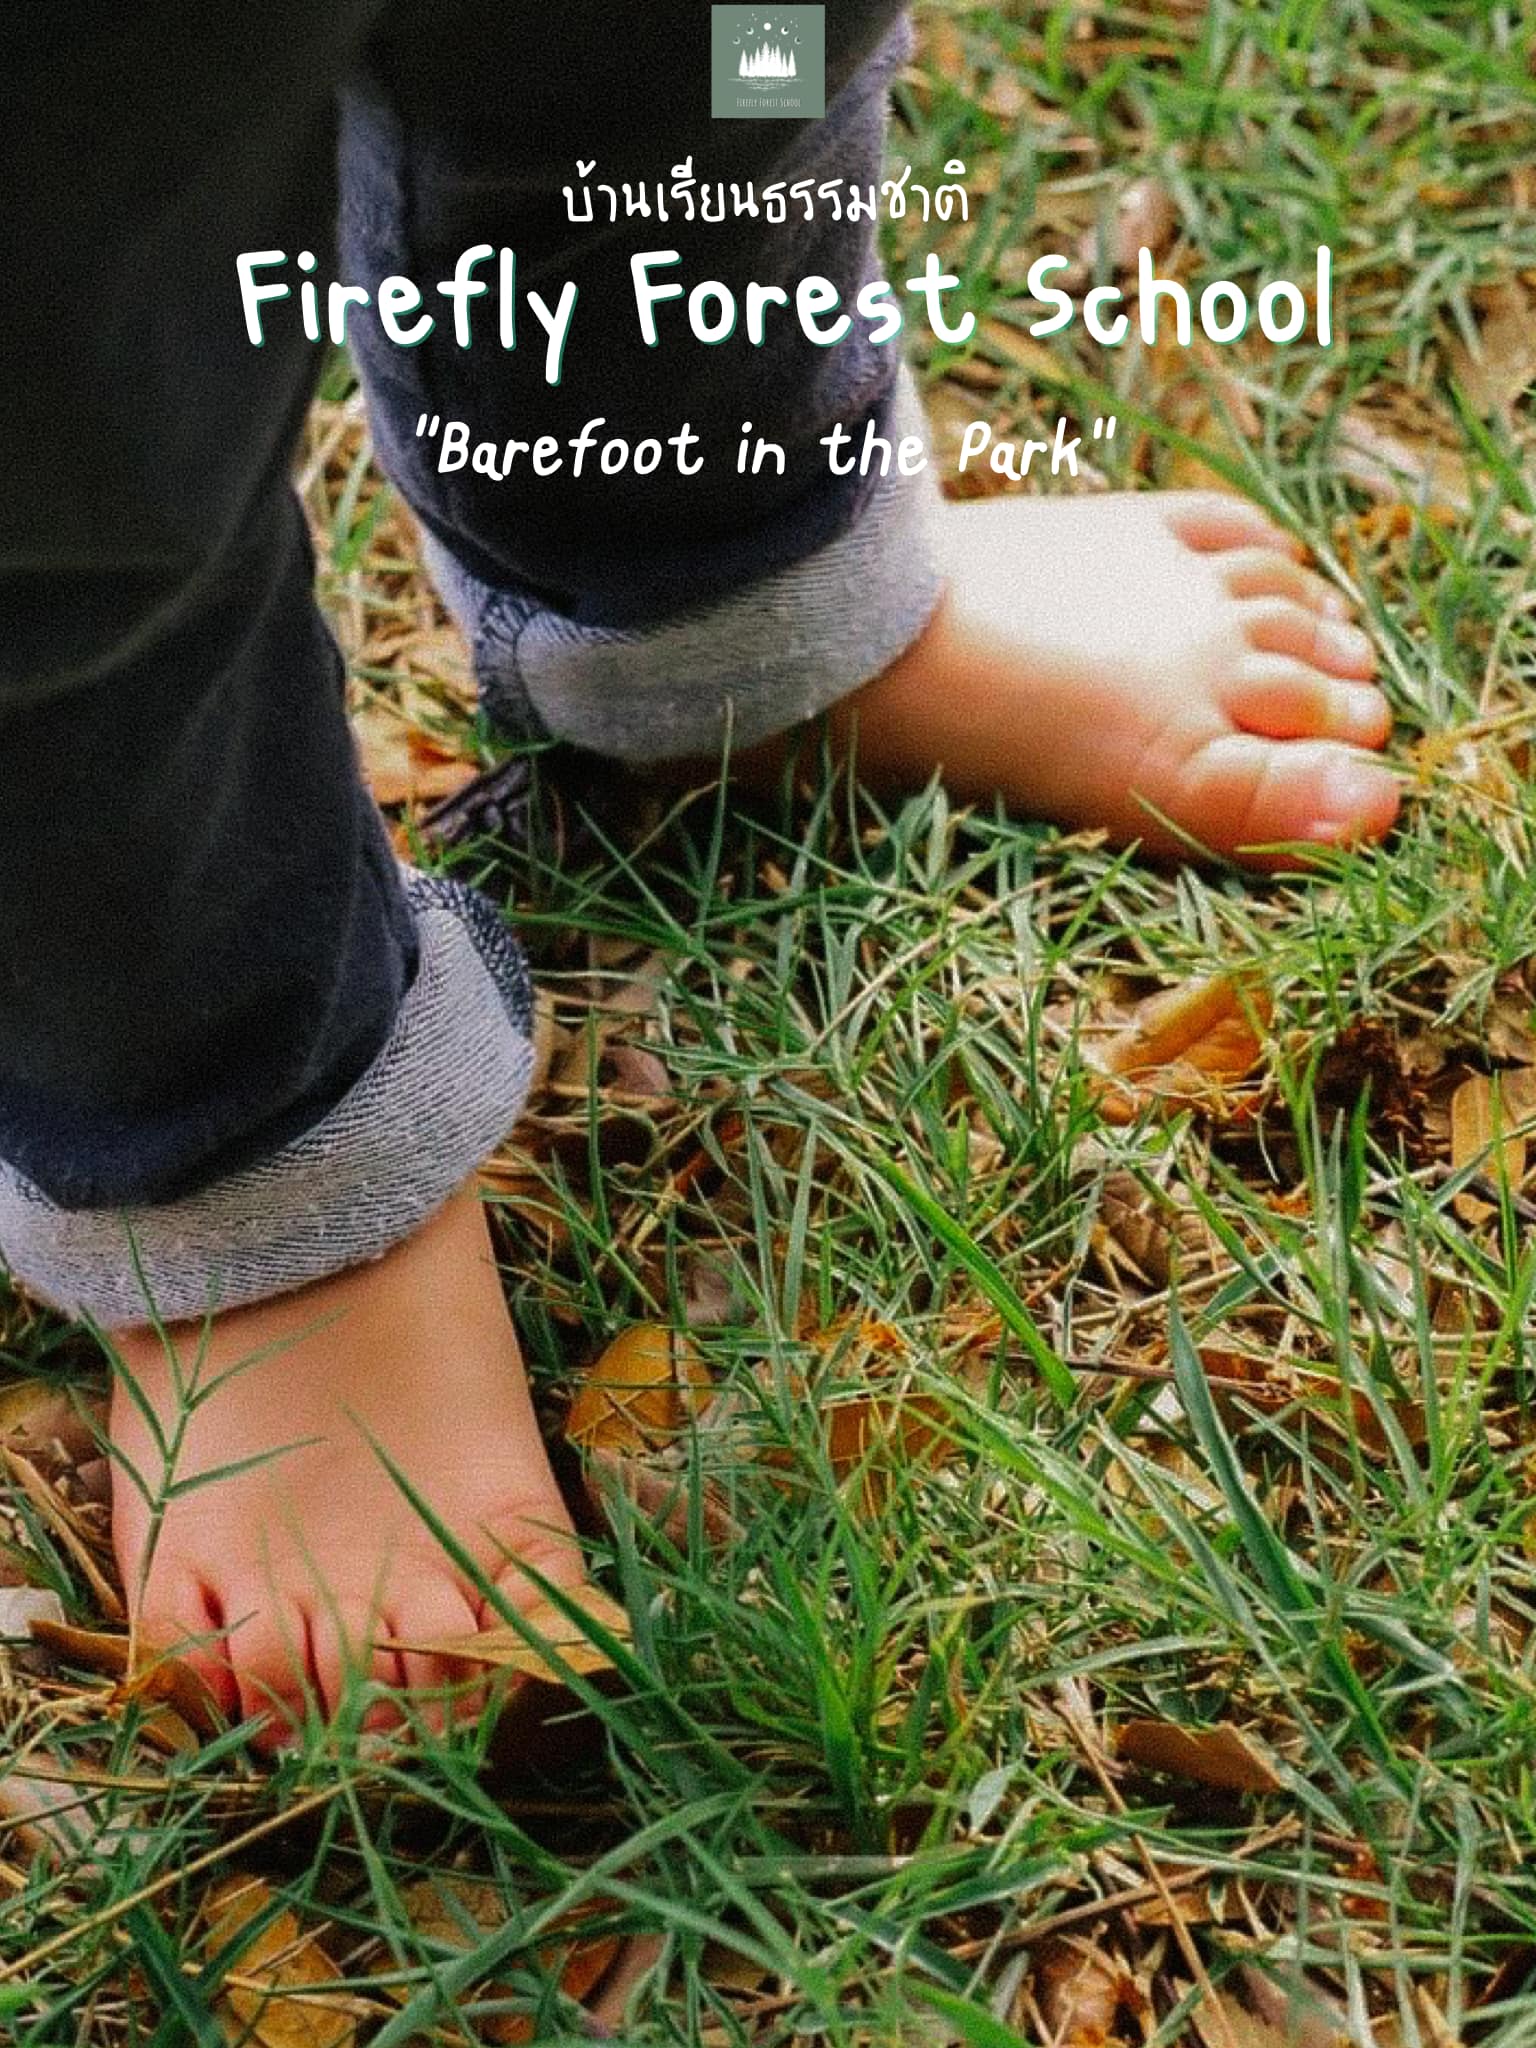 Barefoot_in_the_park_Firefly-Forest-School_โรงเรียนหิ่งห้อย_1